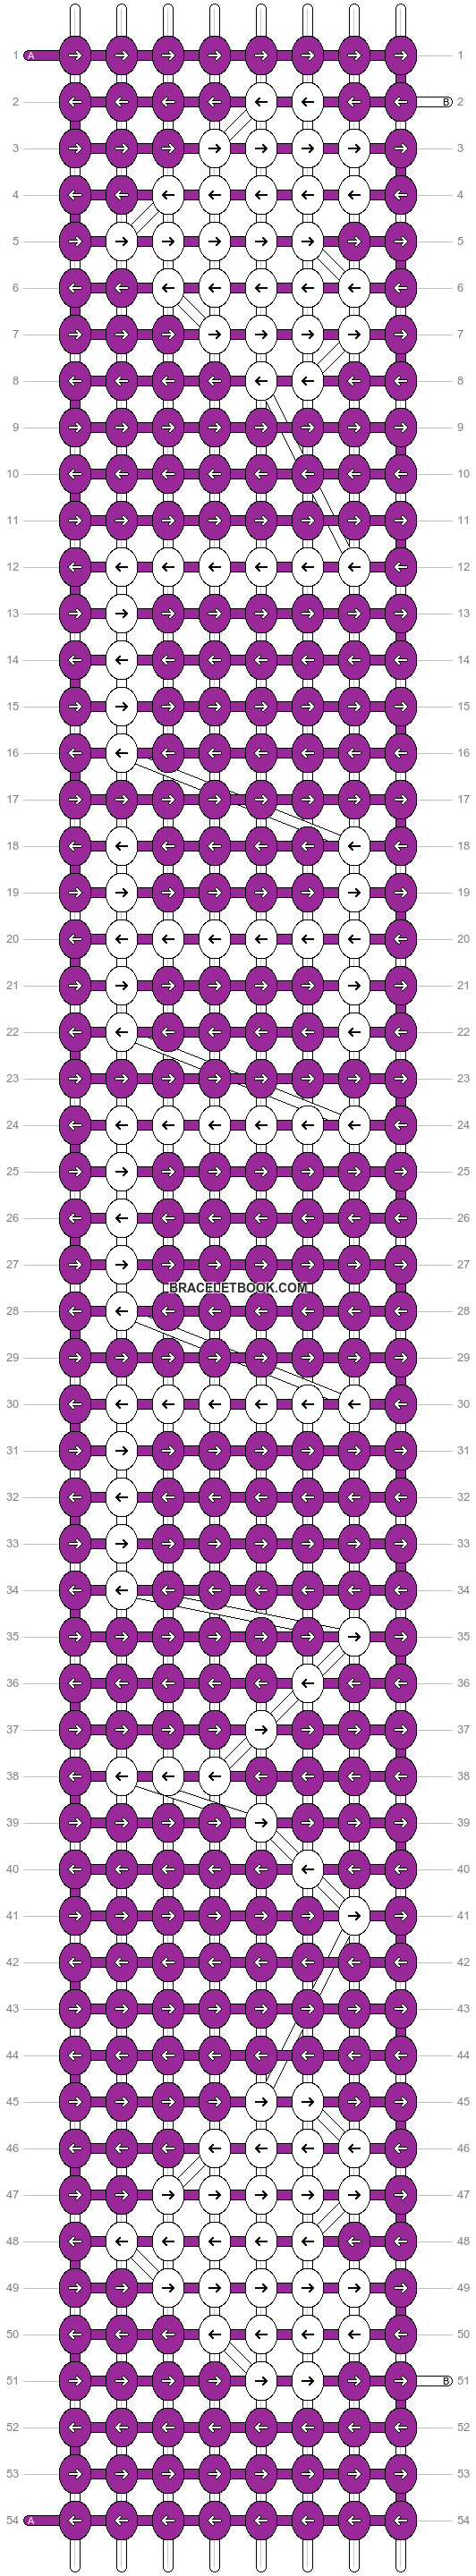 Alpha pattern #3872 variation #120251 pattern